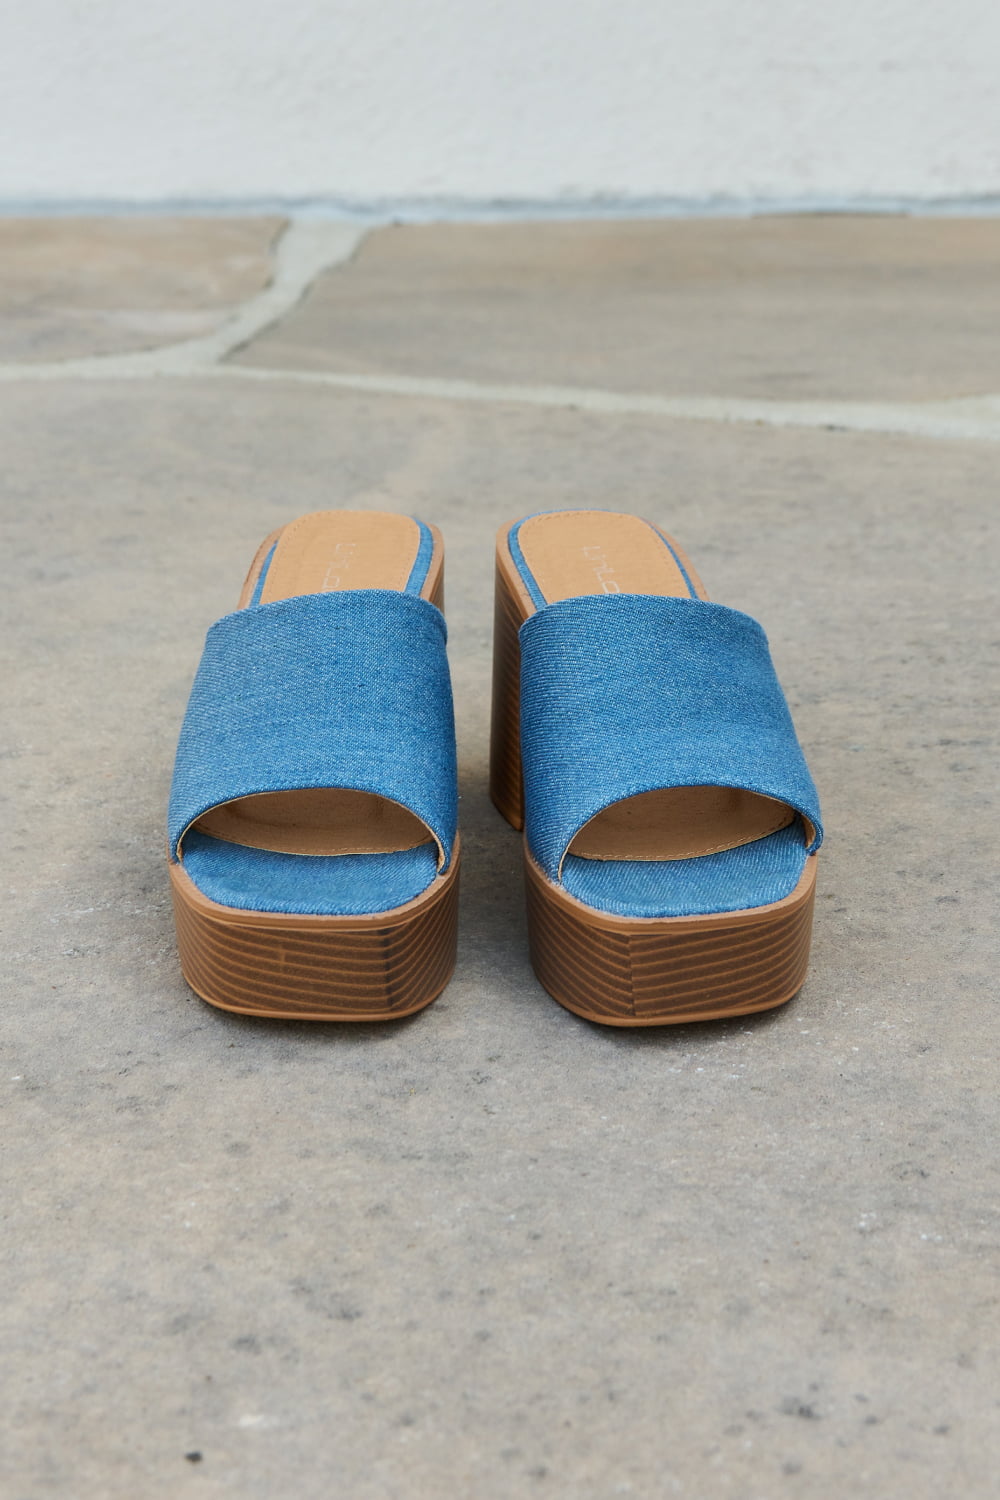 Denim Platform Heel Mules Sandals